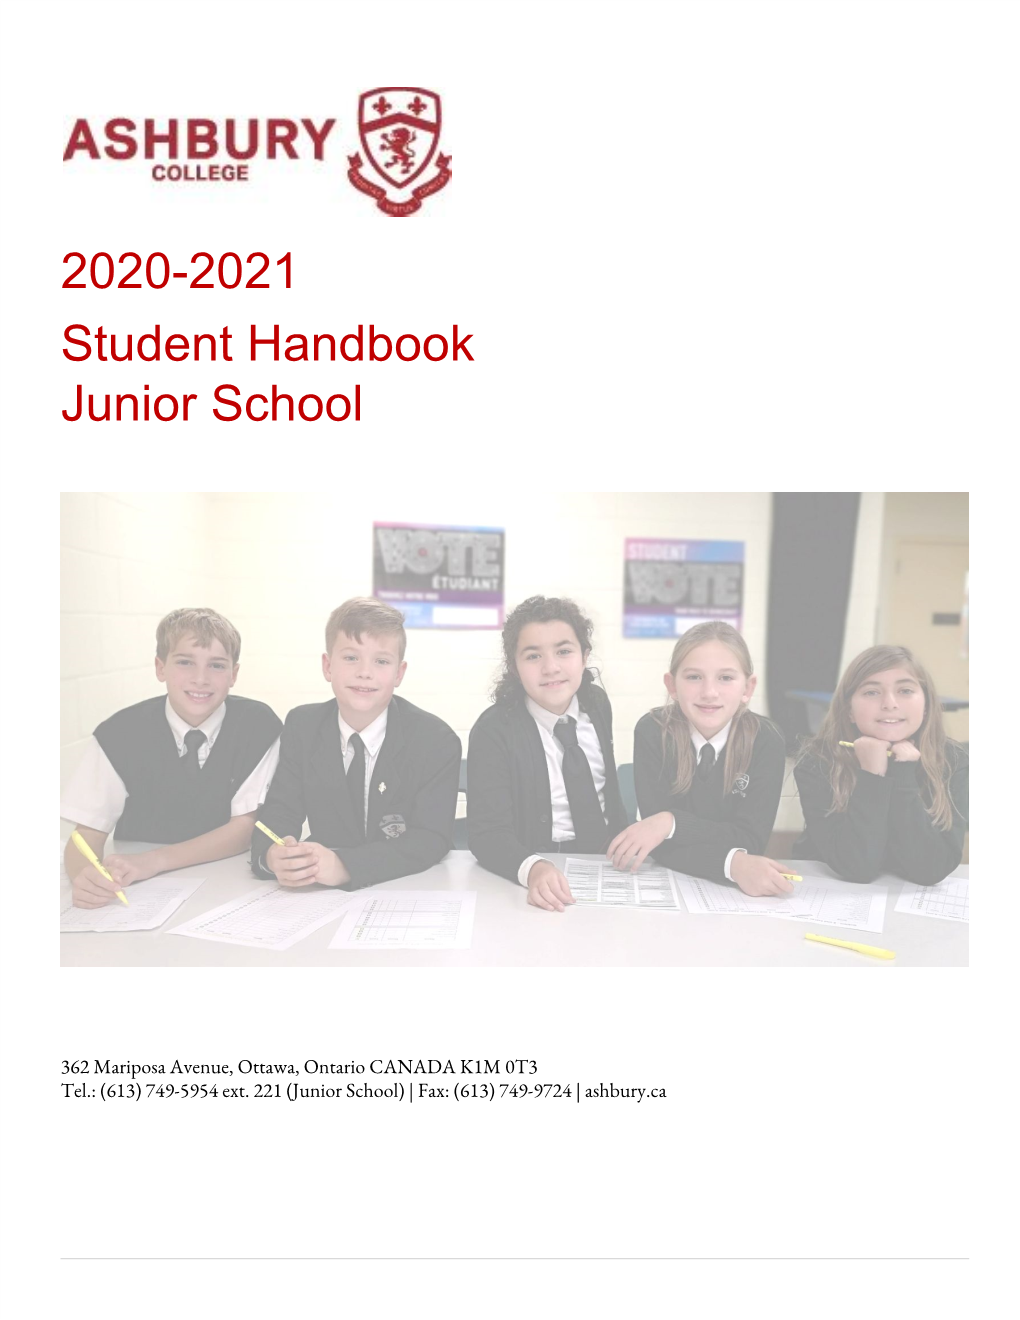 2020-2021 Student Handbook Junior School